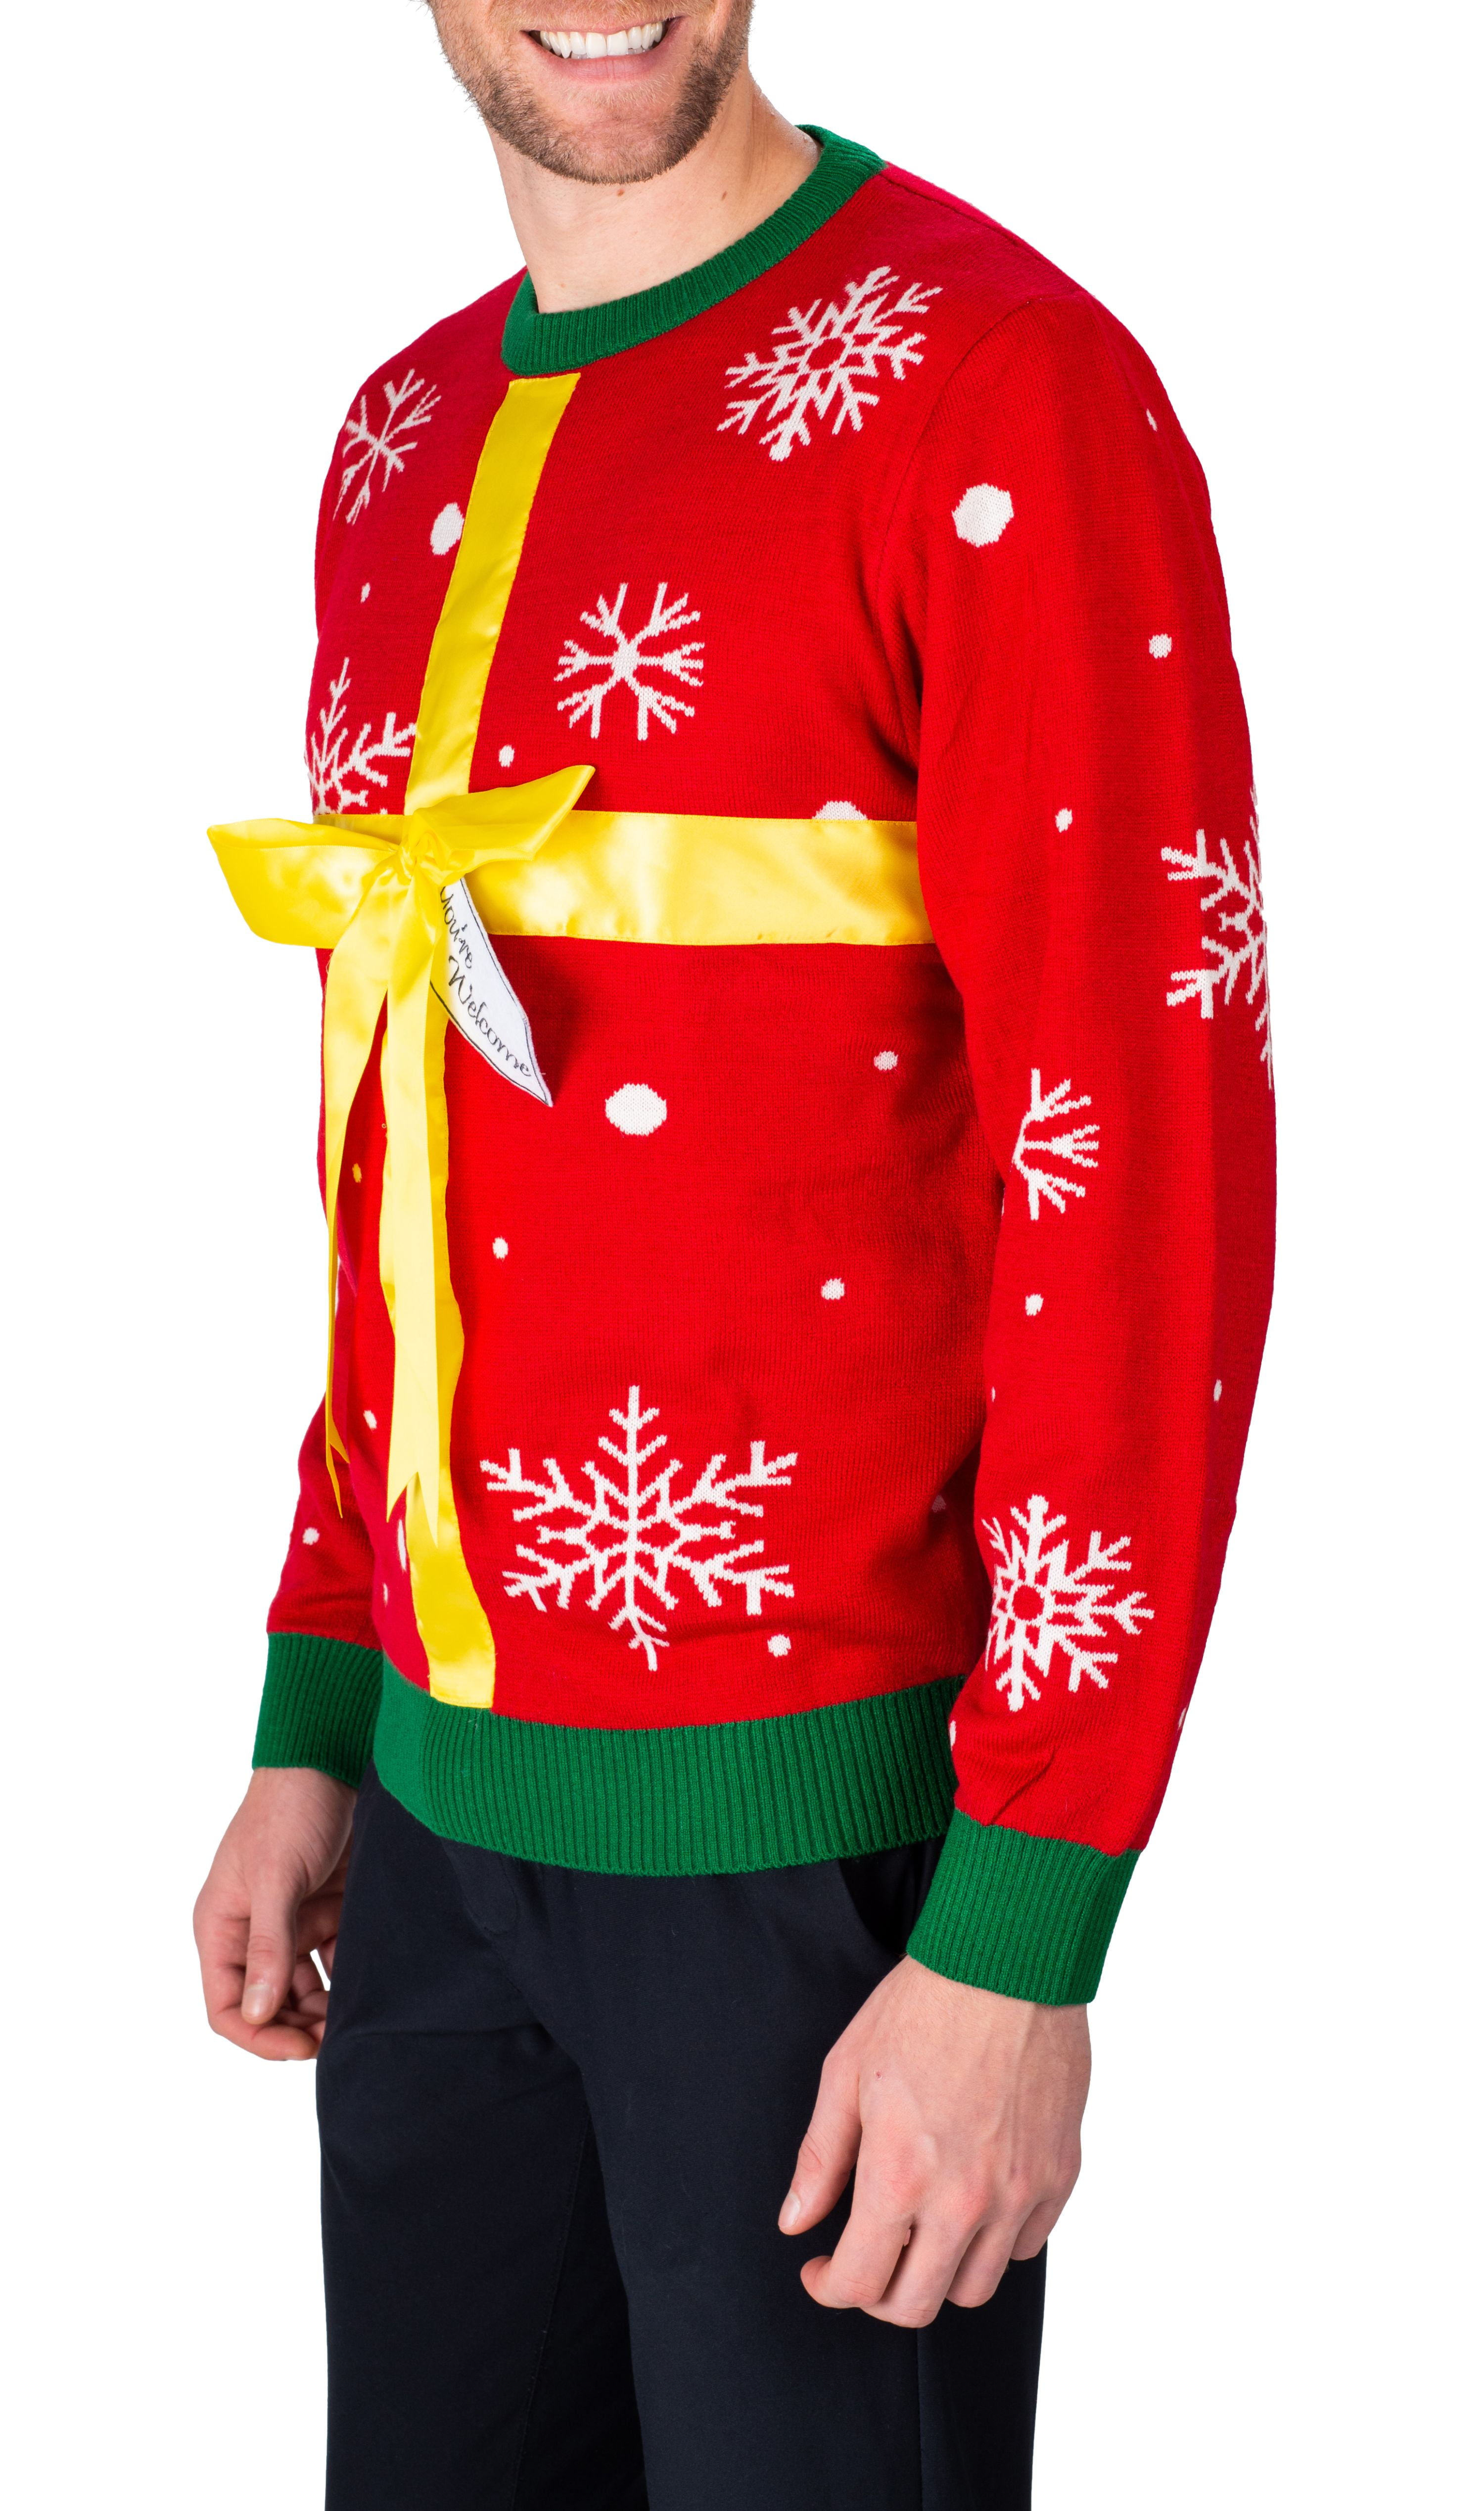 SLEEPHERO Men's Ugly Sweater Winter Holidays Ugly Christmas Sweater Holiday  Party Men's Knit Pullover Sweater with Battery Powered Lights Holiday  Present Medium 